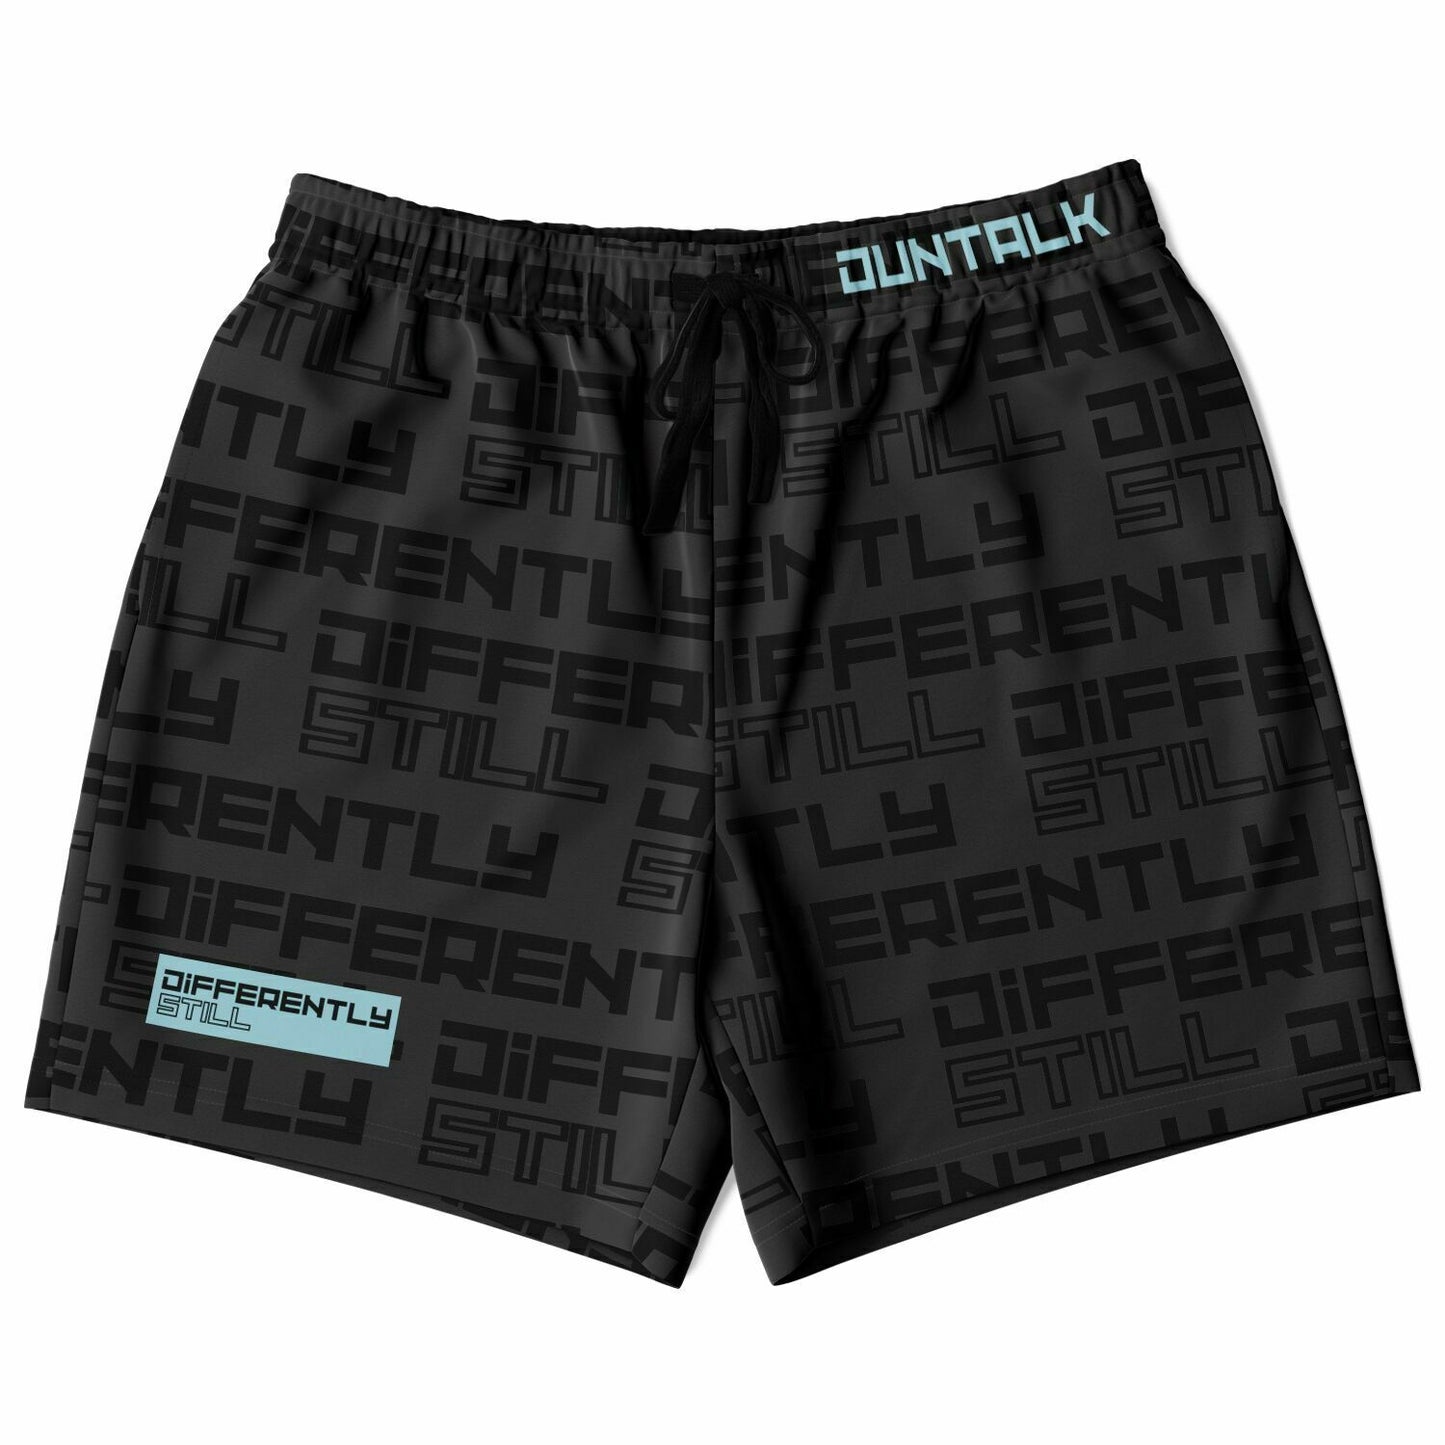 Duntalk "Differently" Basketball Mid Shorts -  Black